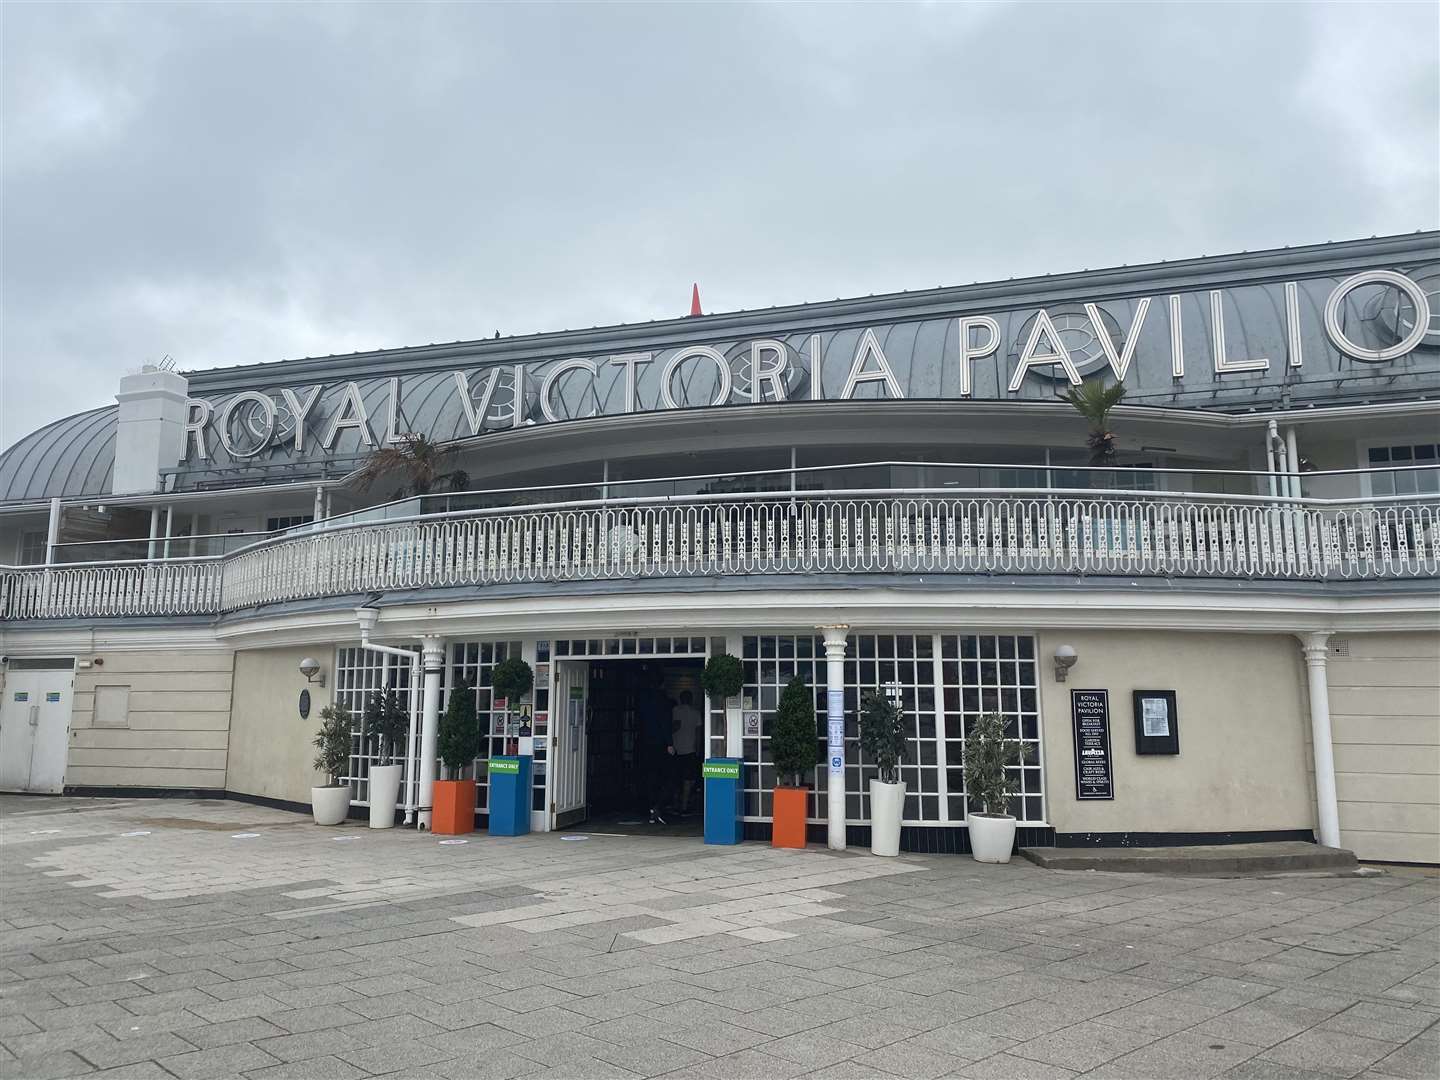 Royal Victoria Pavilion, Ramsgate's Wetherspoons